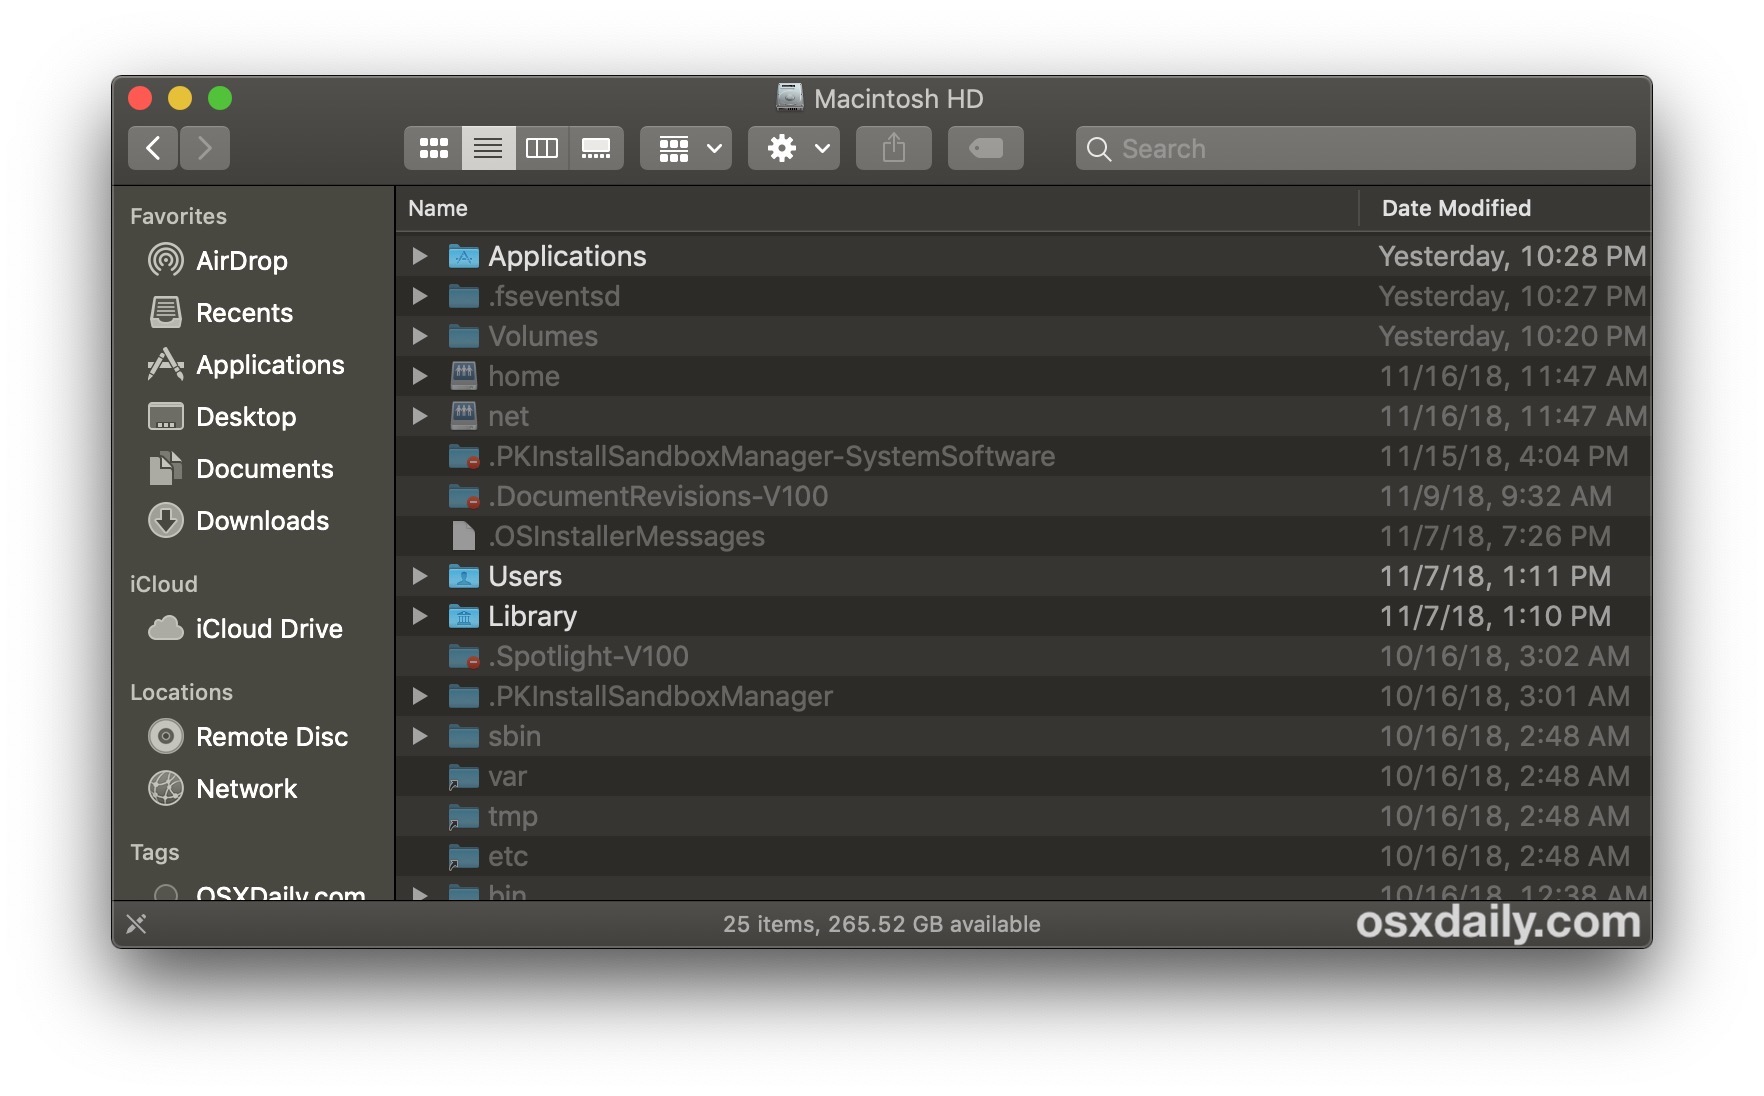 Regular Dark mode theme in Mac OS